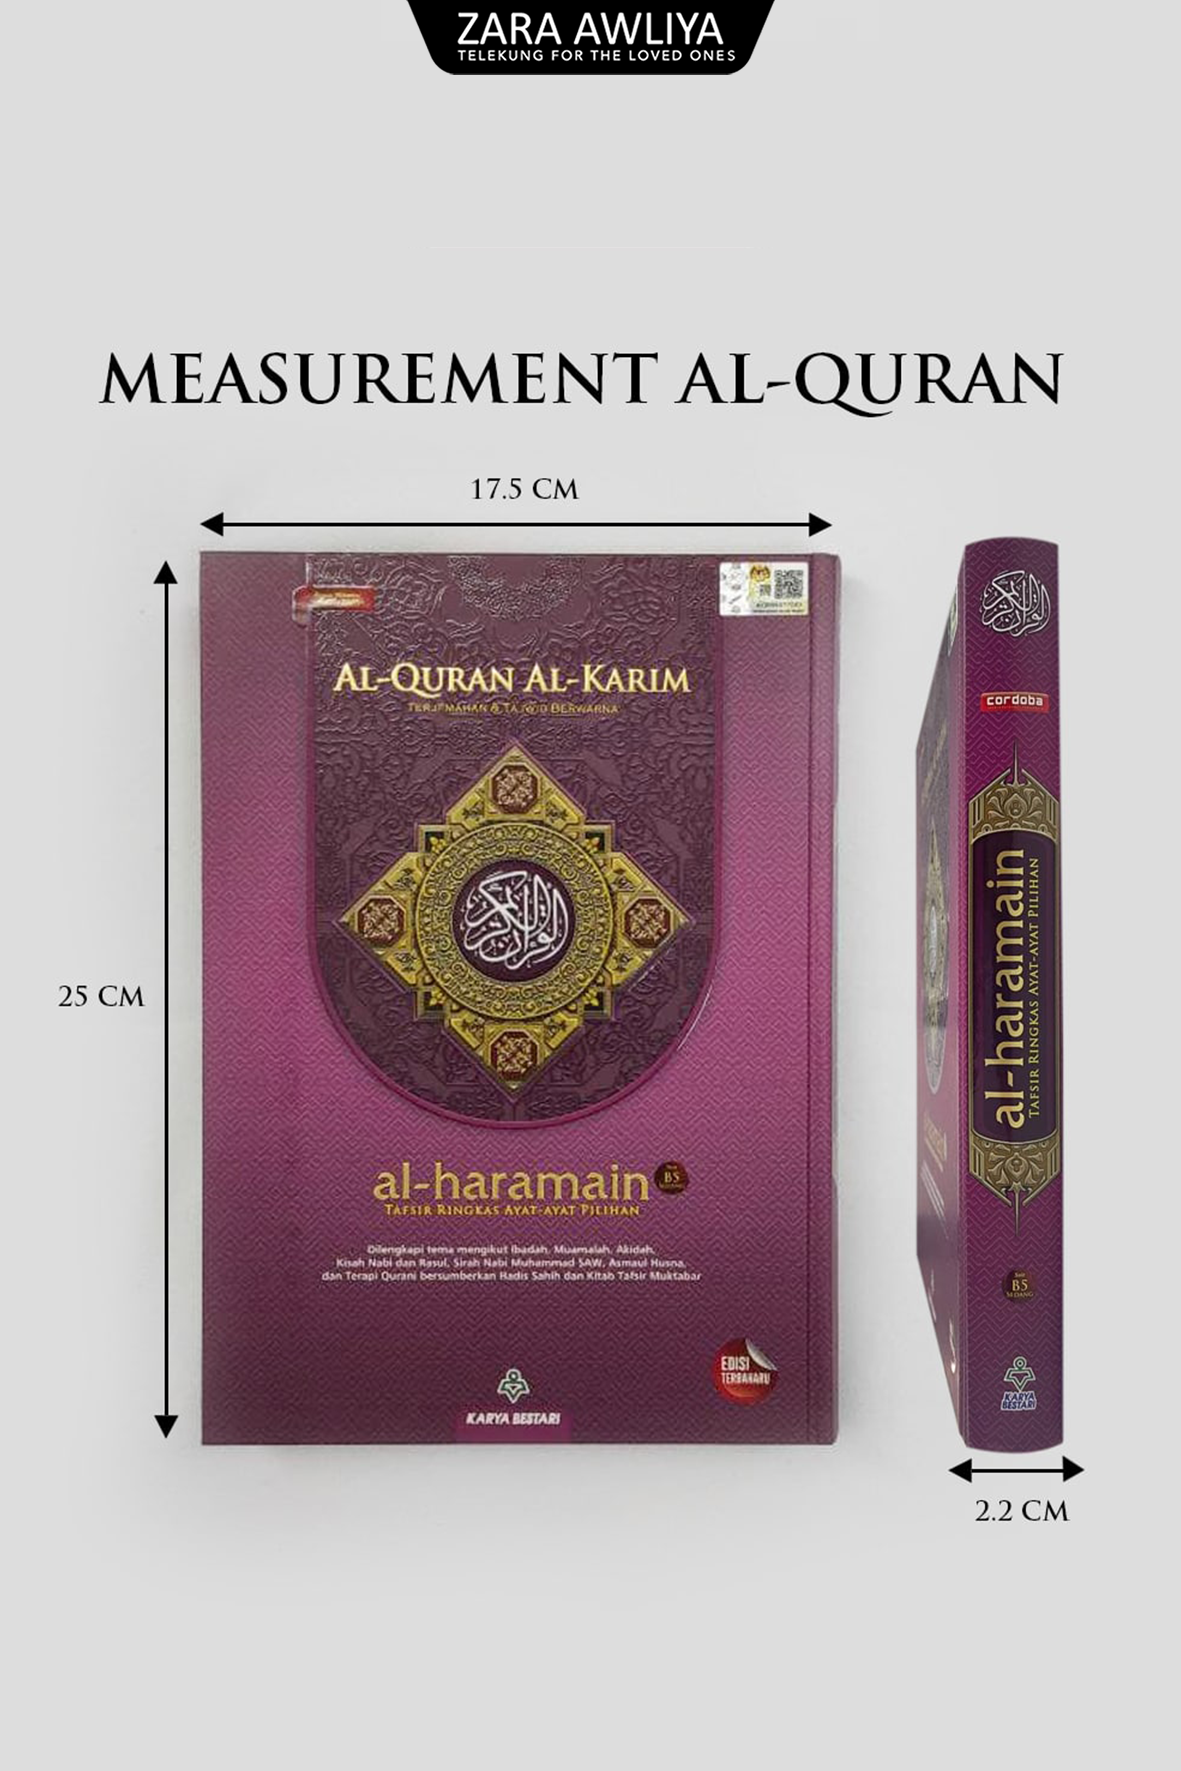 Al Quran Tafsir & Tagging